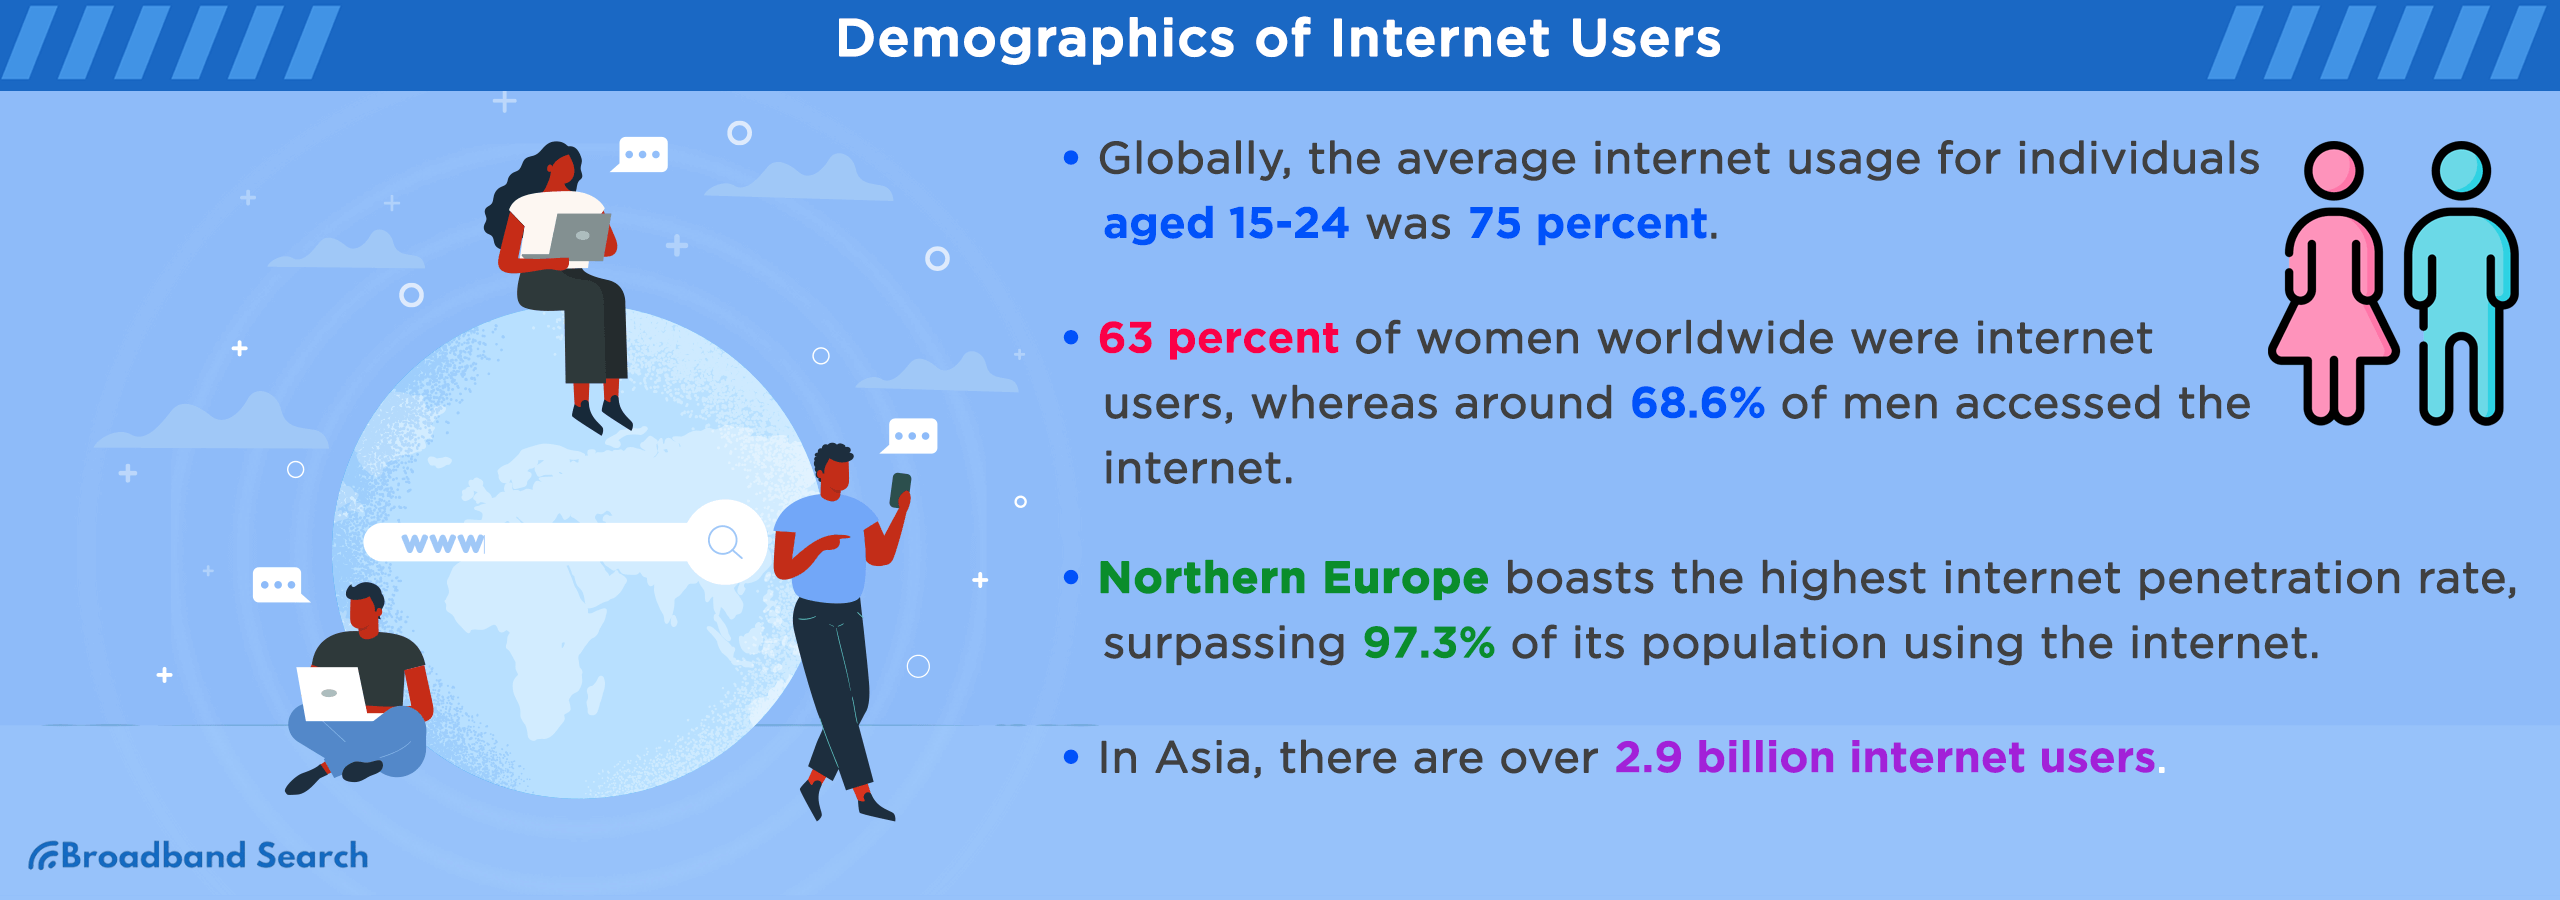 Demographics of internet users